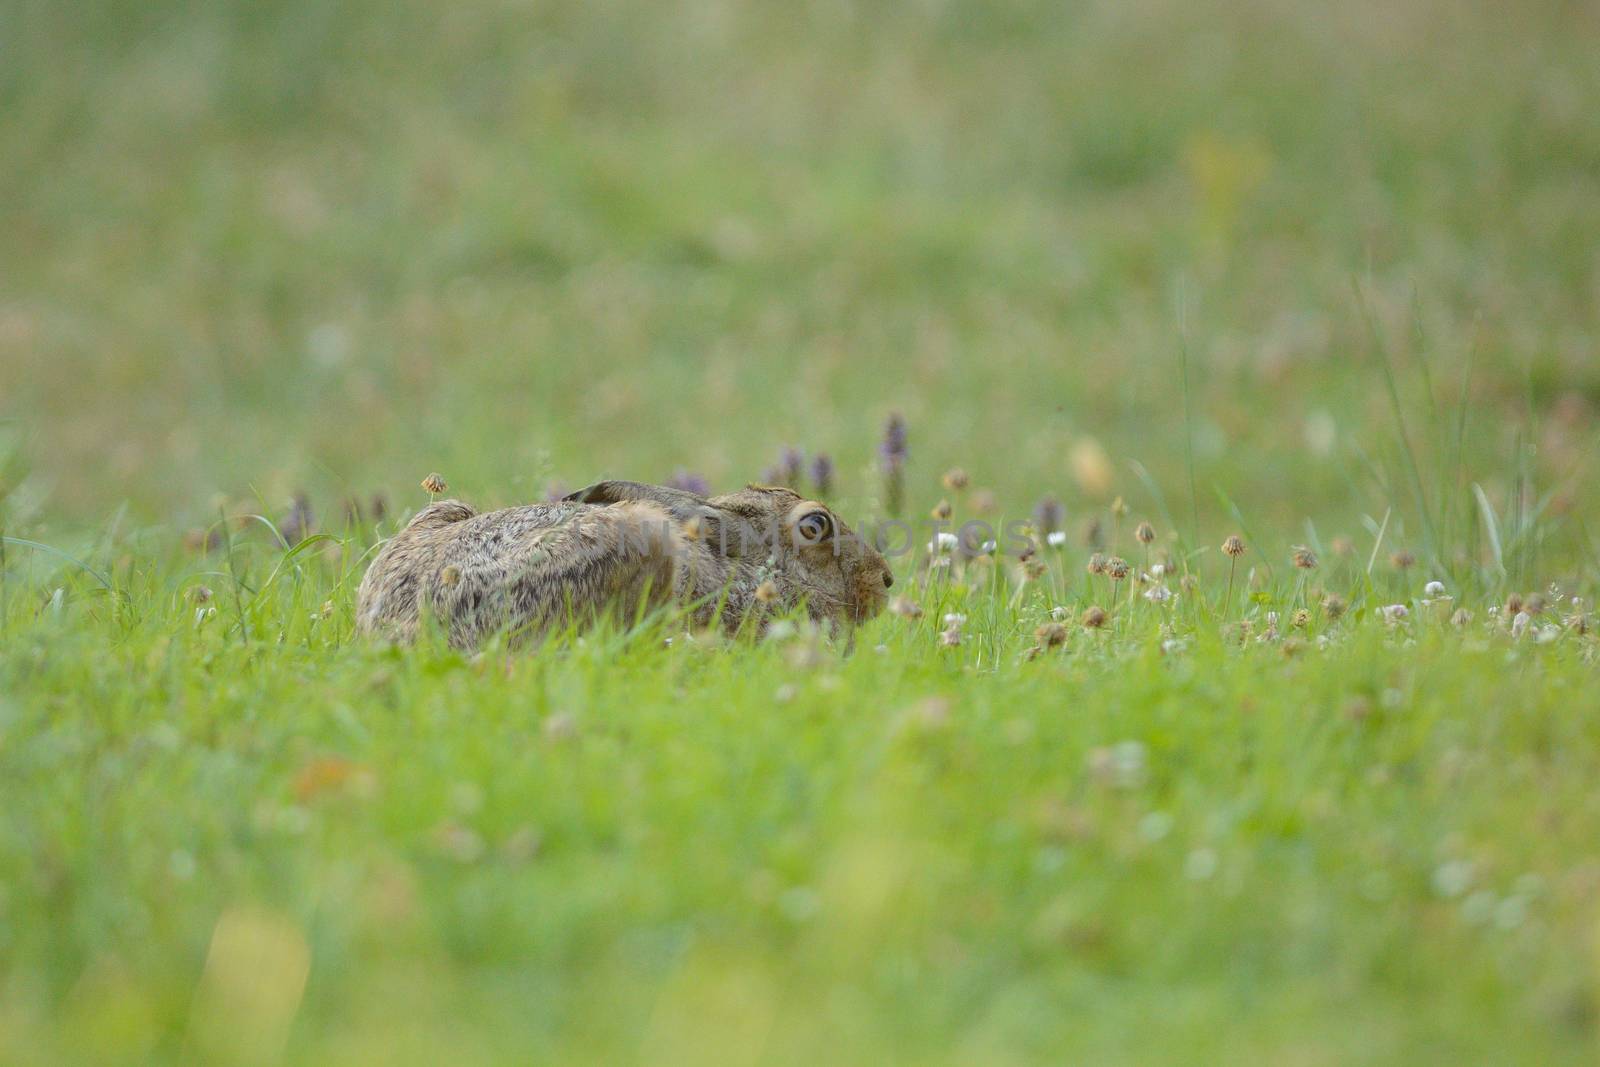 Hare, rabbit by ozkanzozmen